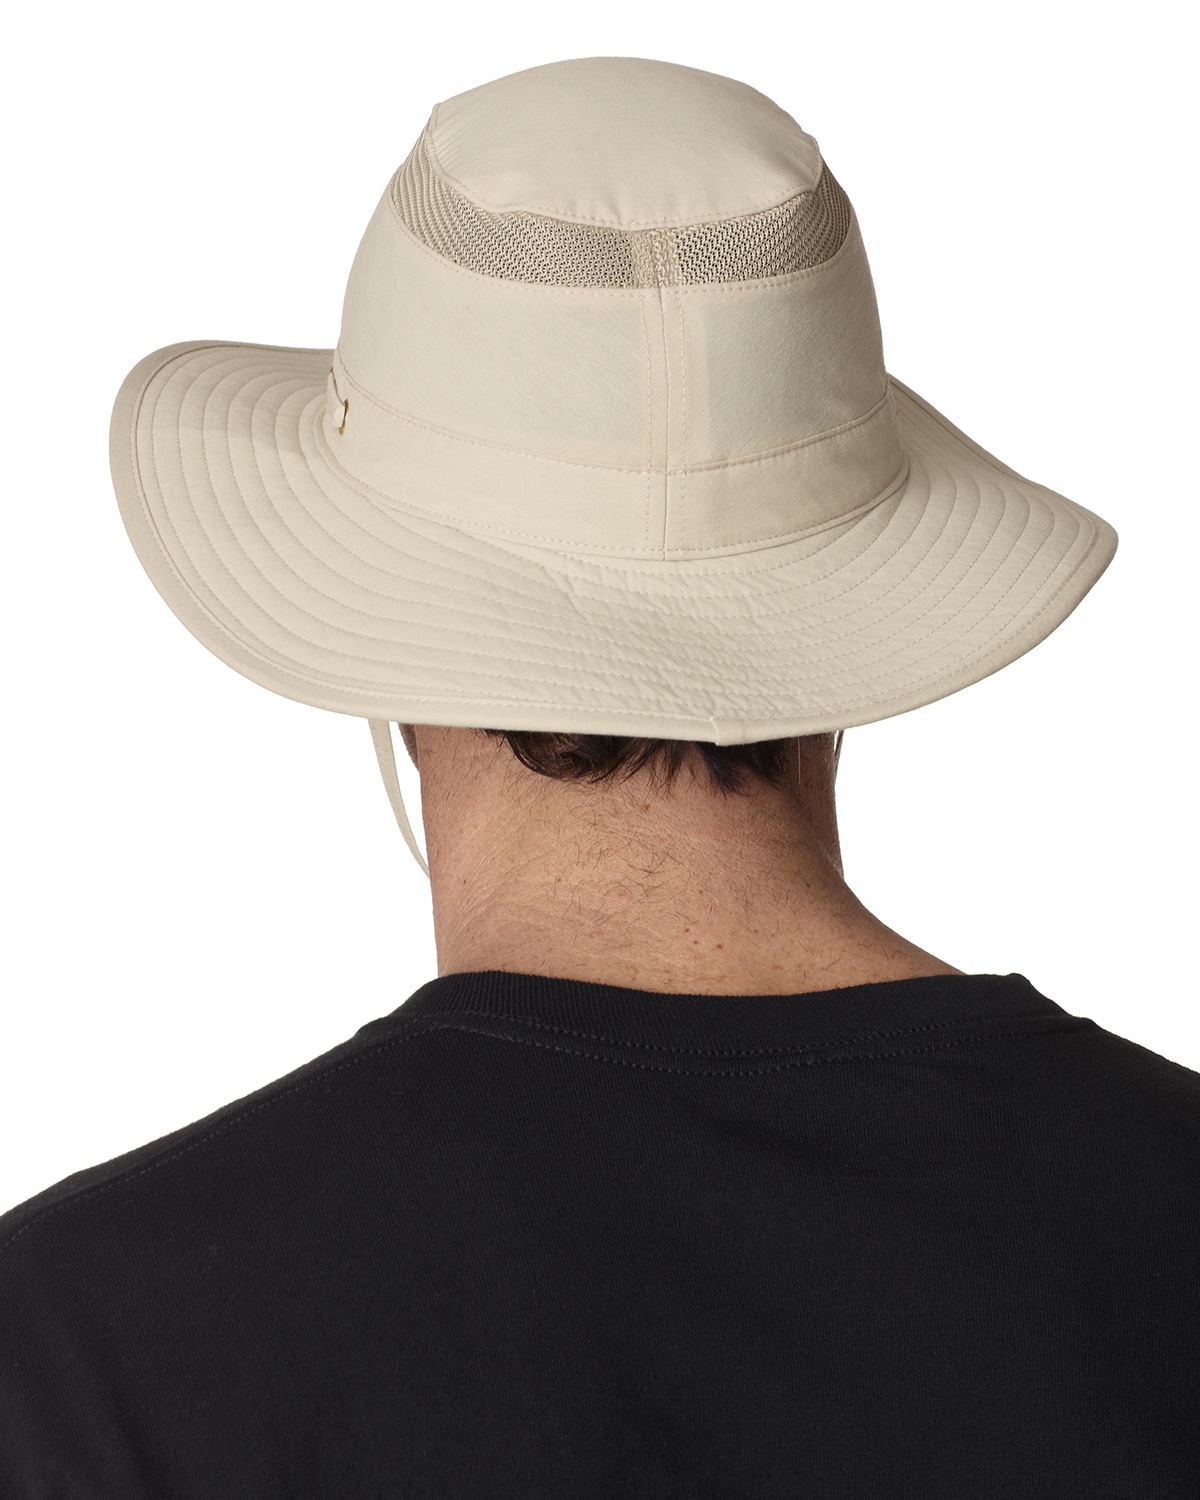 'Adams OB101 Outback Brimmed Hat'